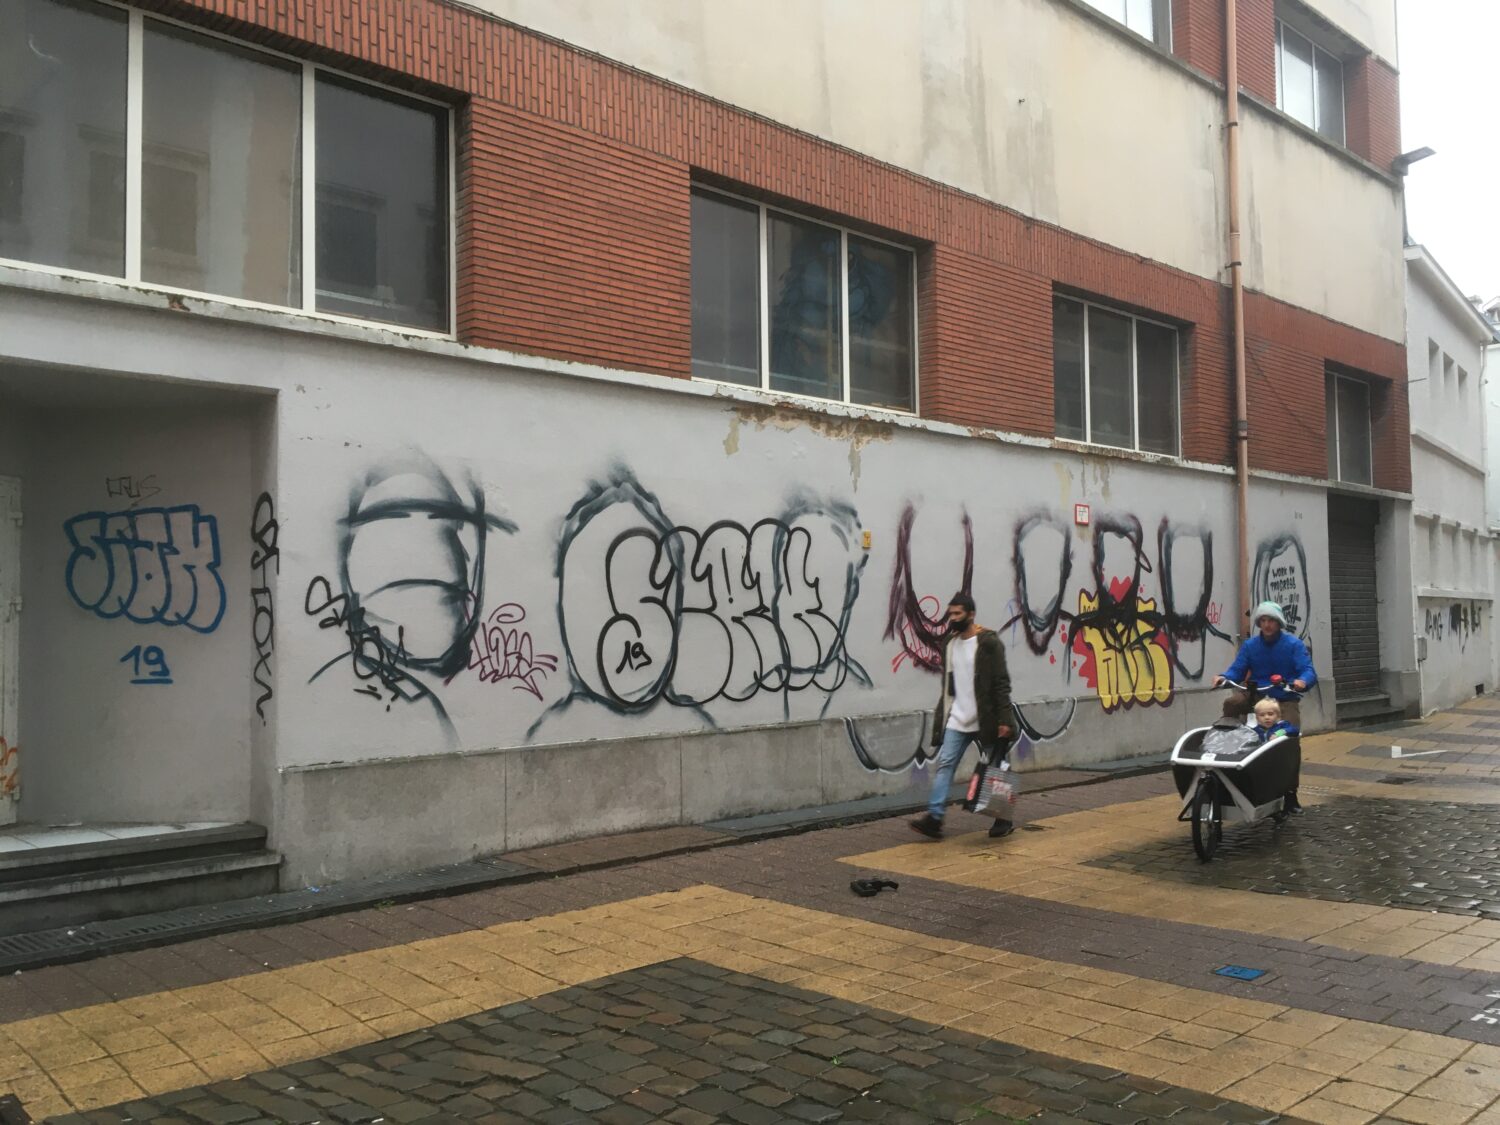 Nieuwe muurschildering in Mechelen tegen illegale graffiti